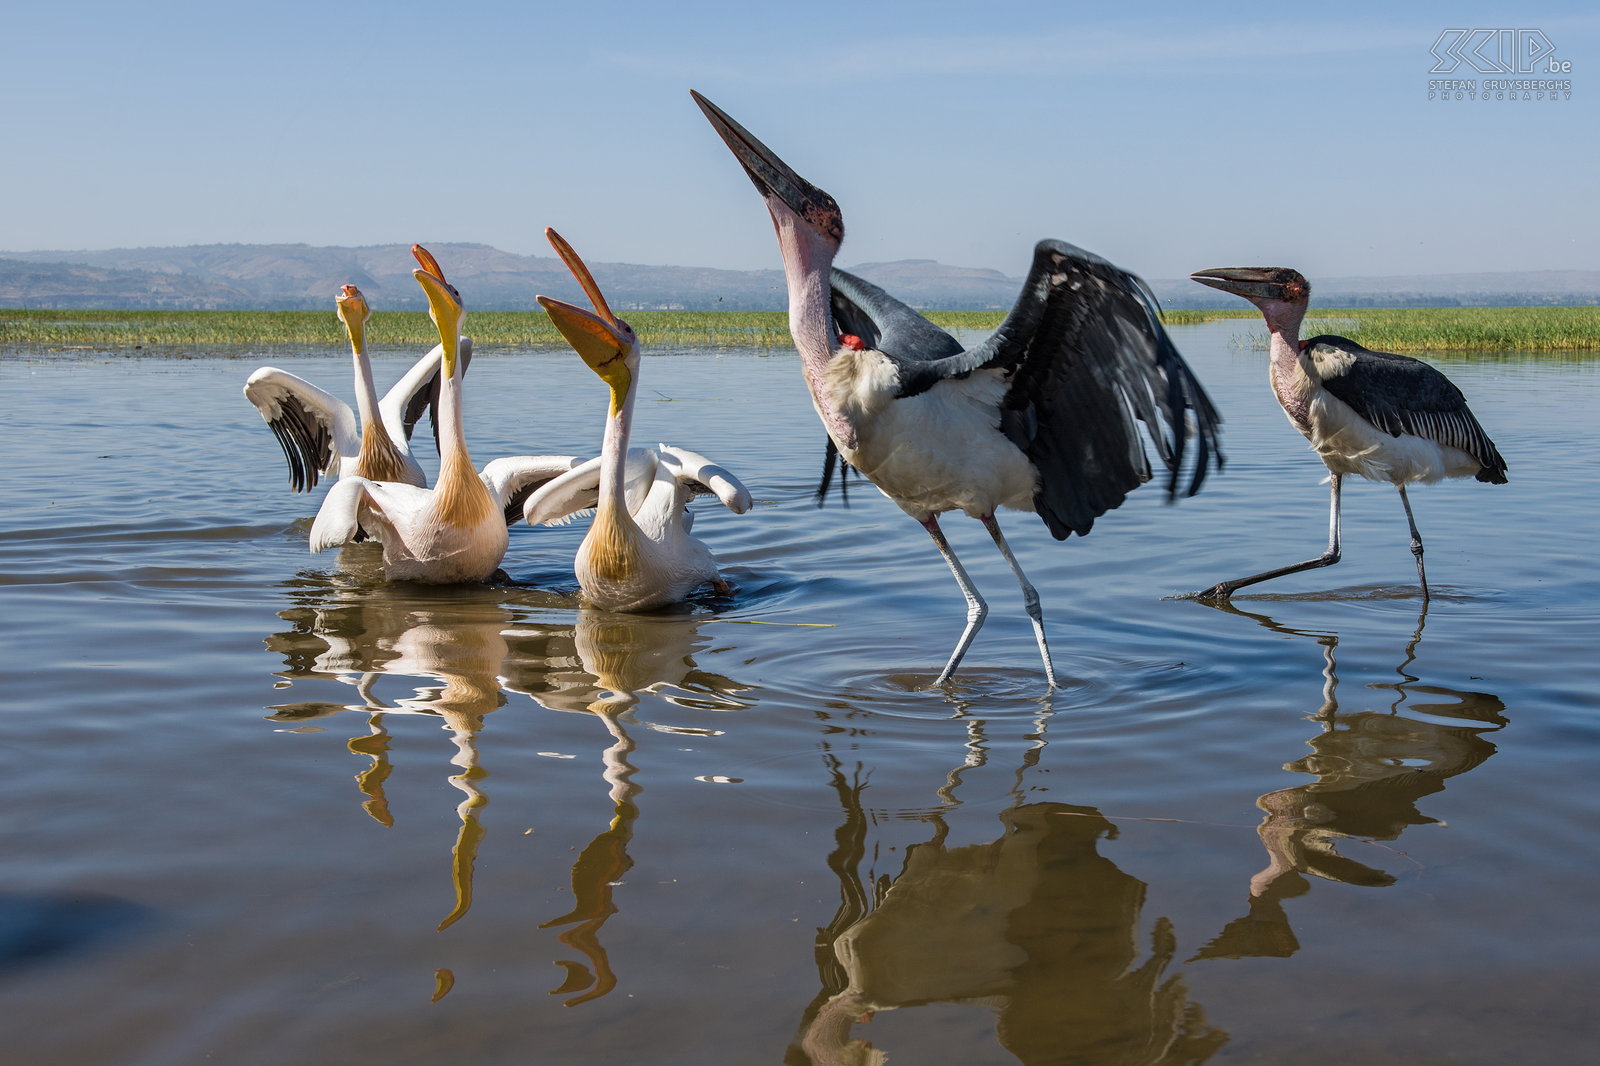 Lake Awassa - Pelikanen en maraboes  Stefan Cruysberghs